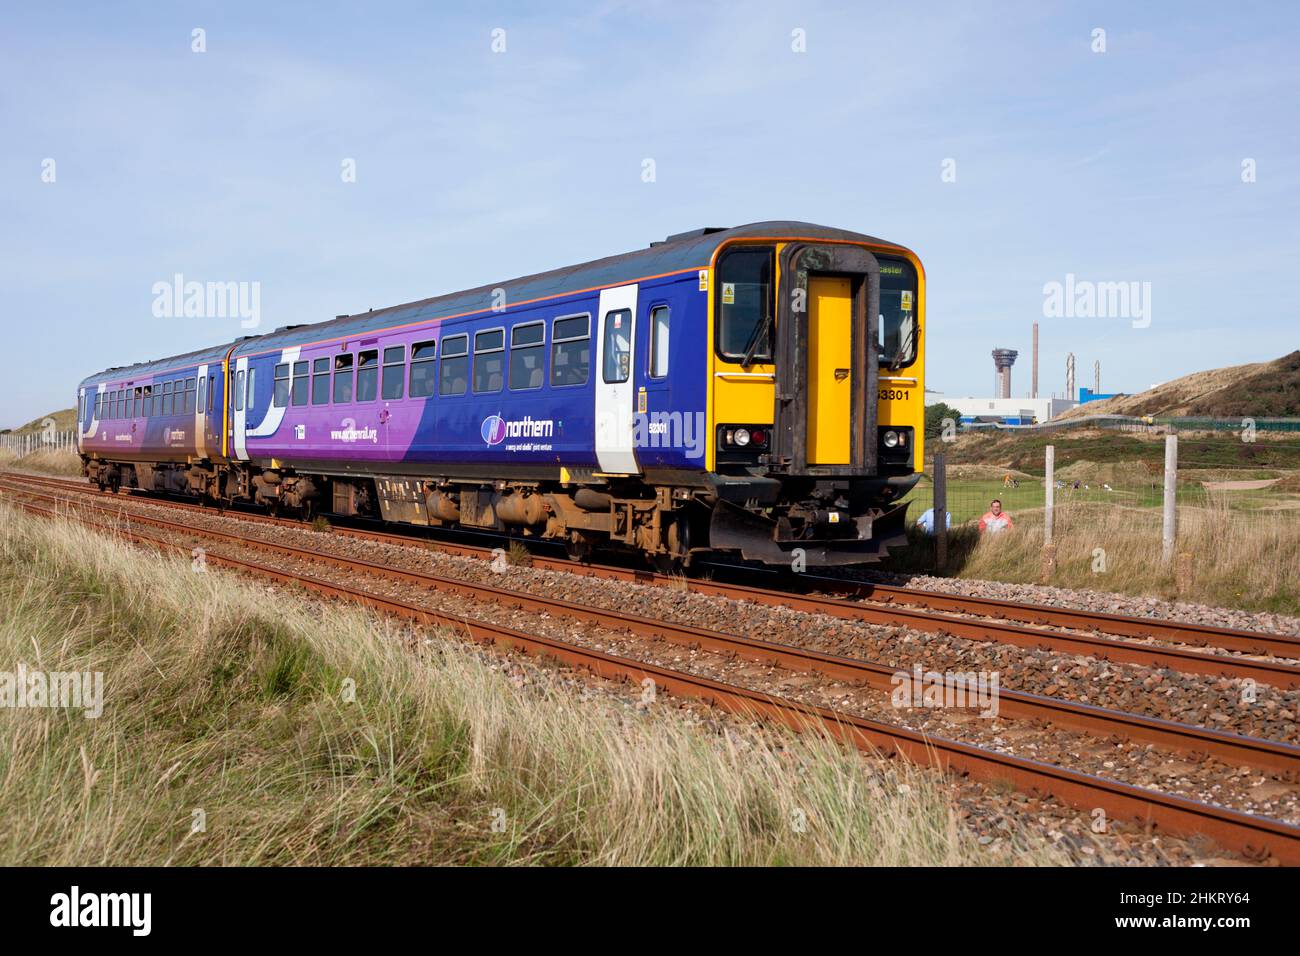 2 Northern rail class 153 sprinter trains 153301 + 153351 passing Sellafield on the Cumbrian coast railway line Stock Photo